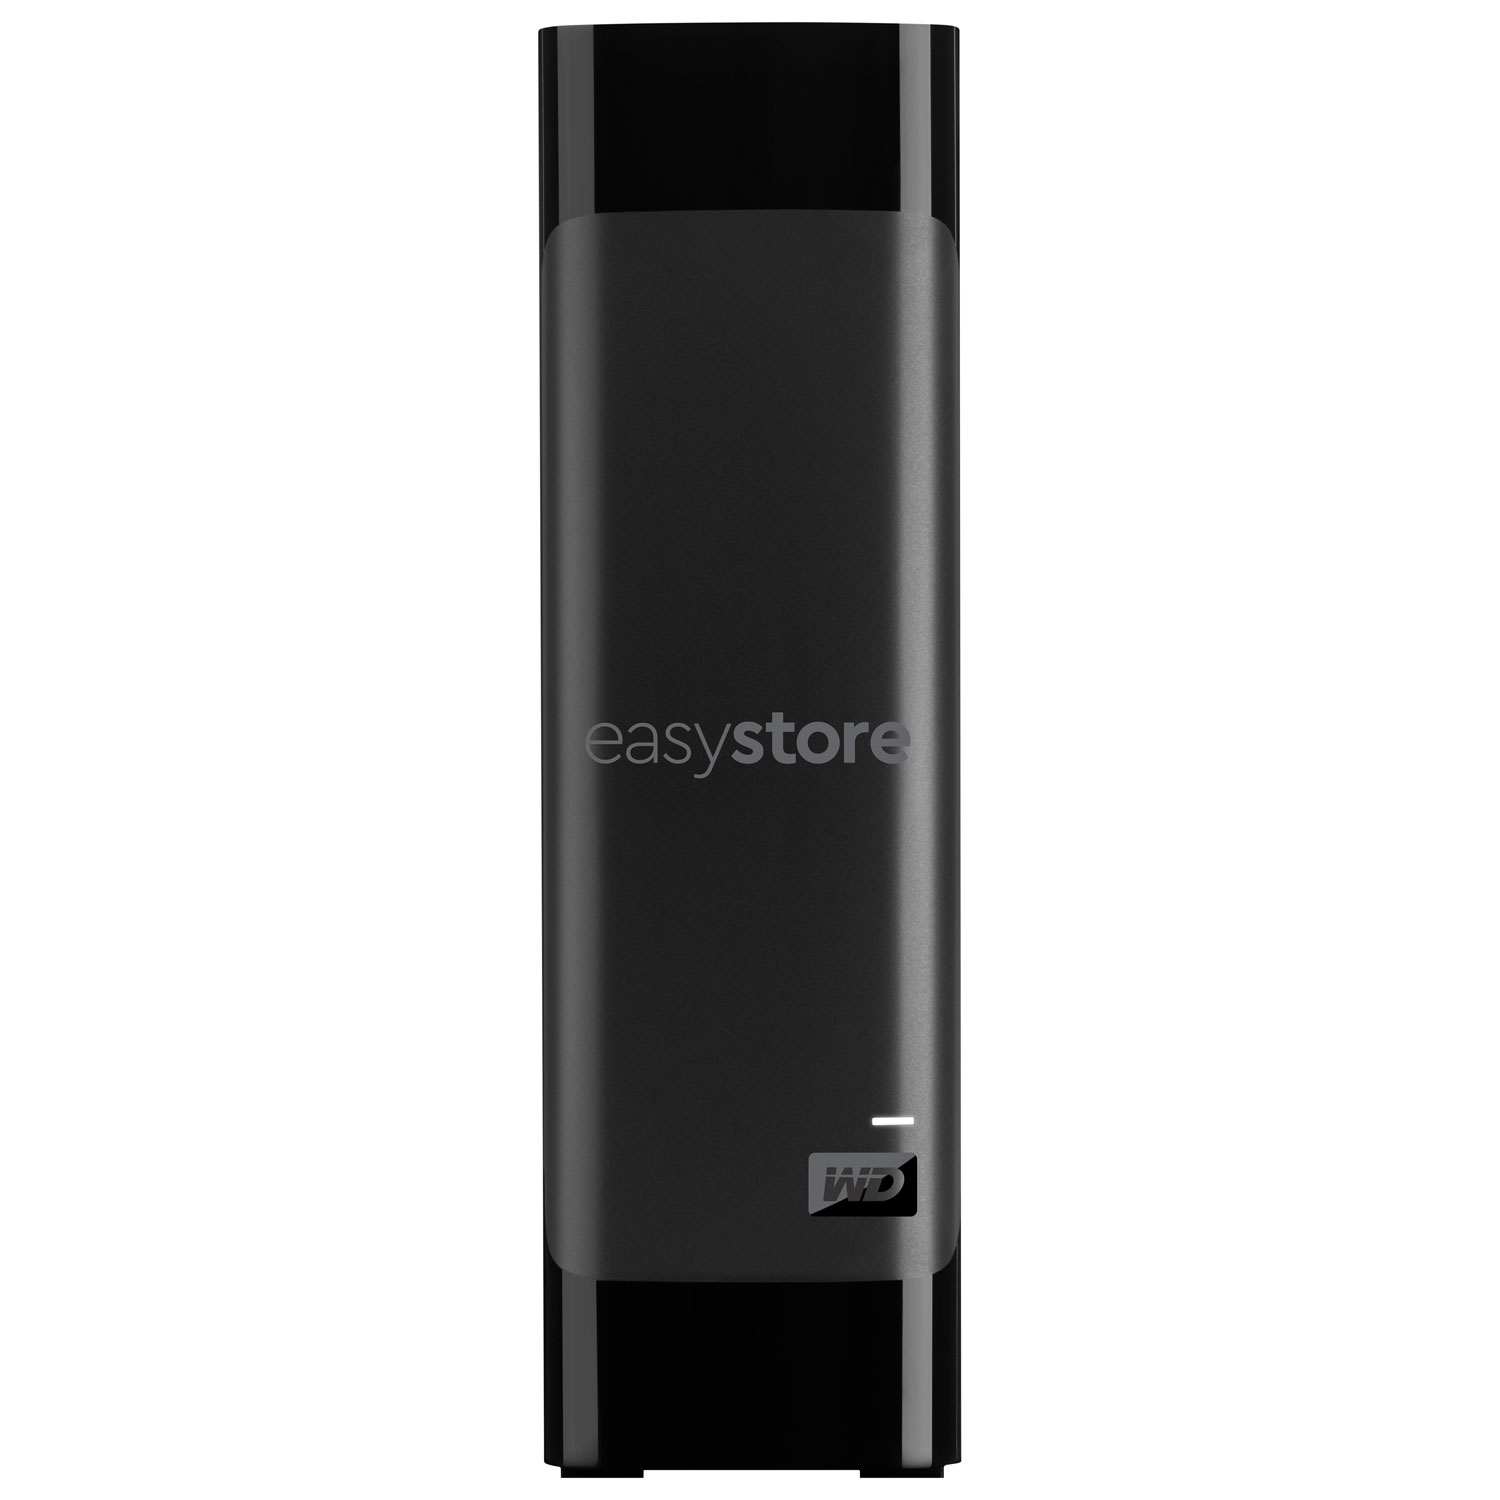 WD easystore 20TB USB 3.0 Desktop External Hard Drive